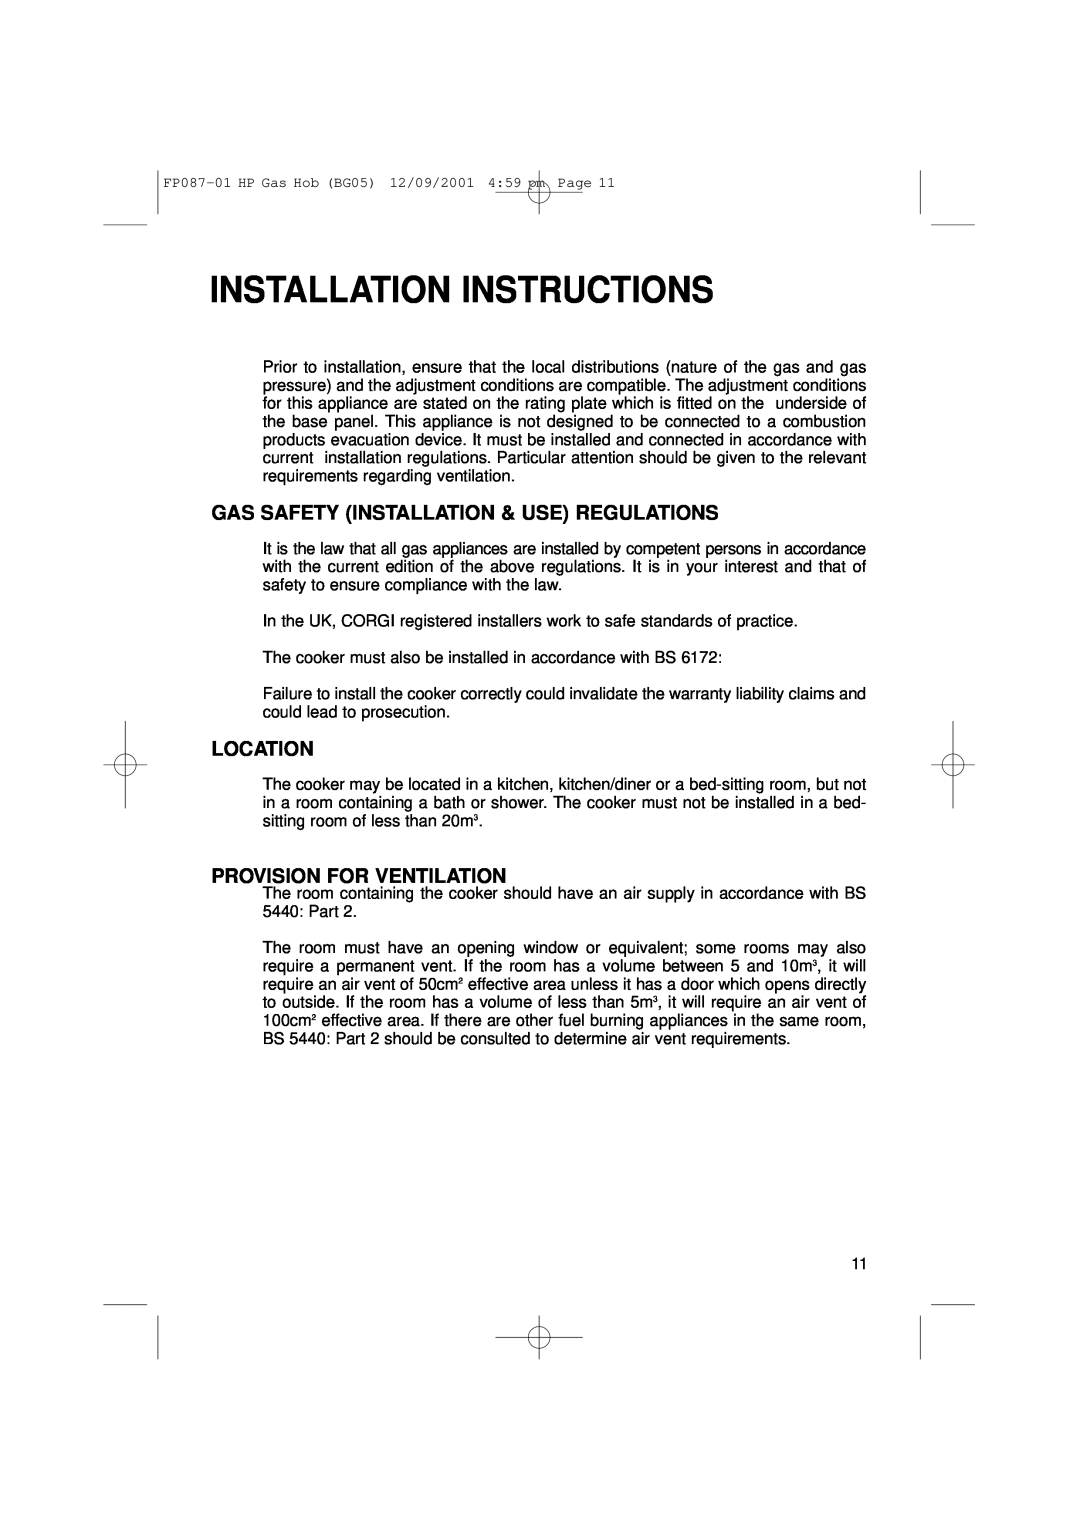 Hotpoint BG05 Installation Instructions, Gas Safety Installation & Use Regulations, Location, Provision For Ventilation 